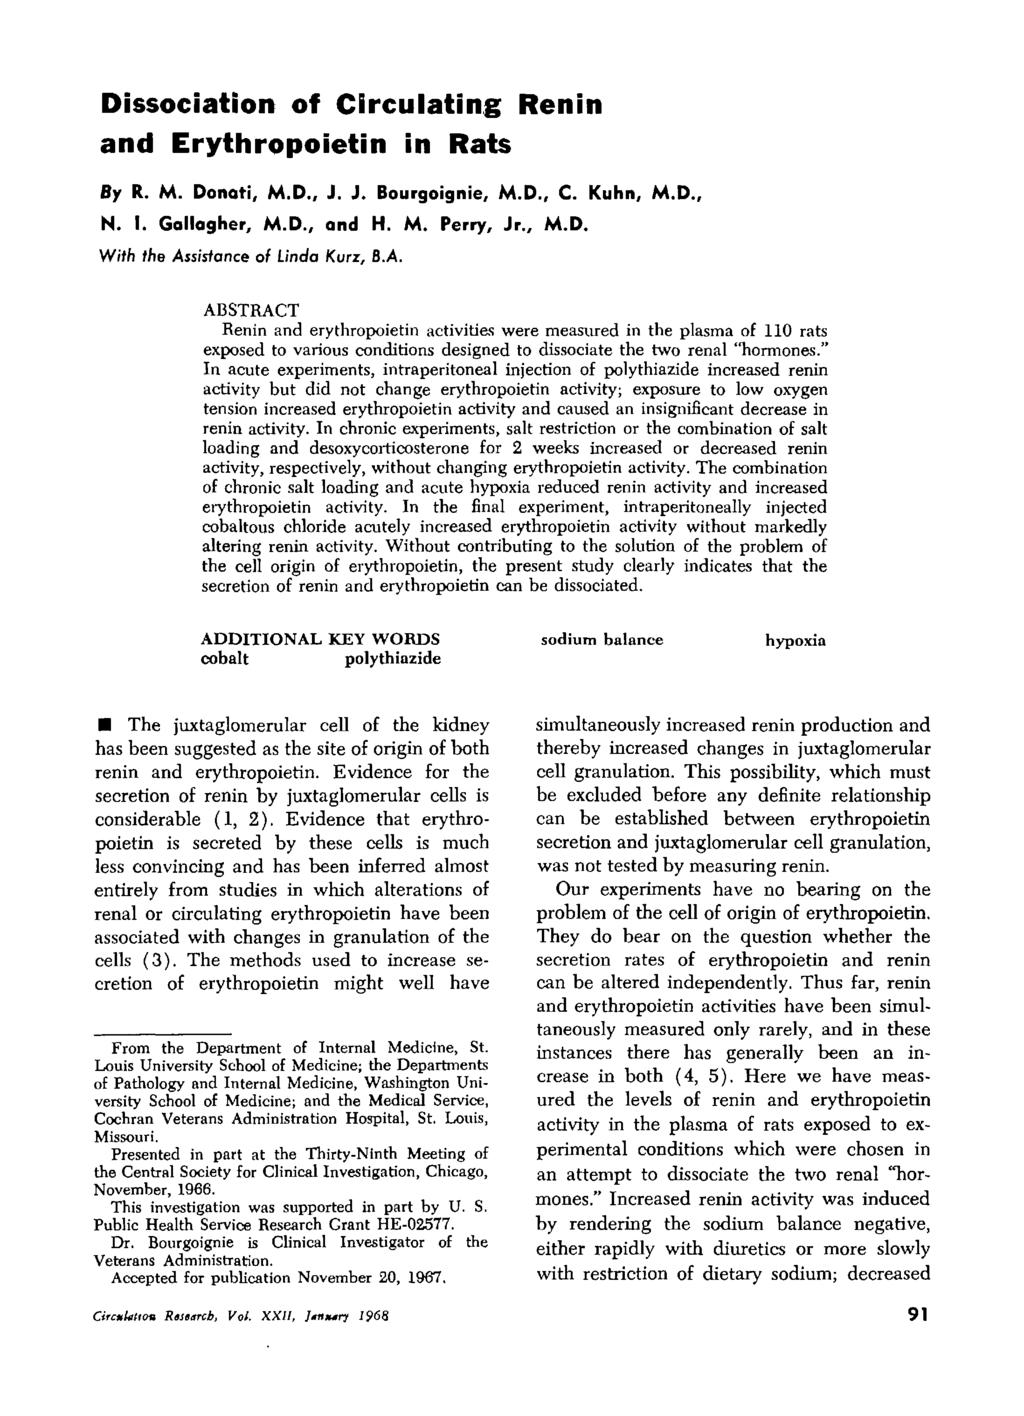 Dissociation of Circulating Renin and Erythropoietin in Rats By R. M. Donati, M.D., J. J. Bourgoignie, M.D., C. Kuhn, M.D., N. I. Gallagher, M.D., and H. M. Perry, Jr., M.D. Wiih ihe Assistance of Linda Kurz, B.